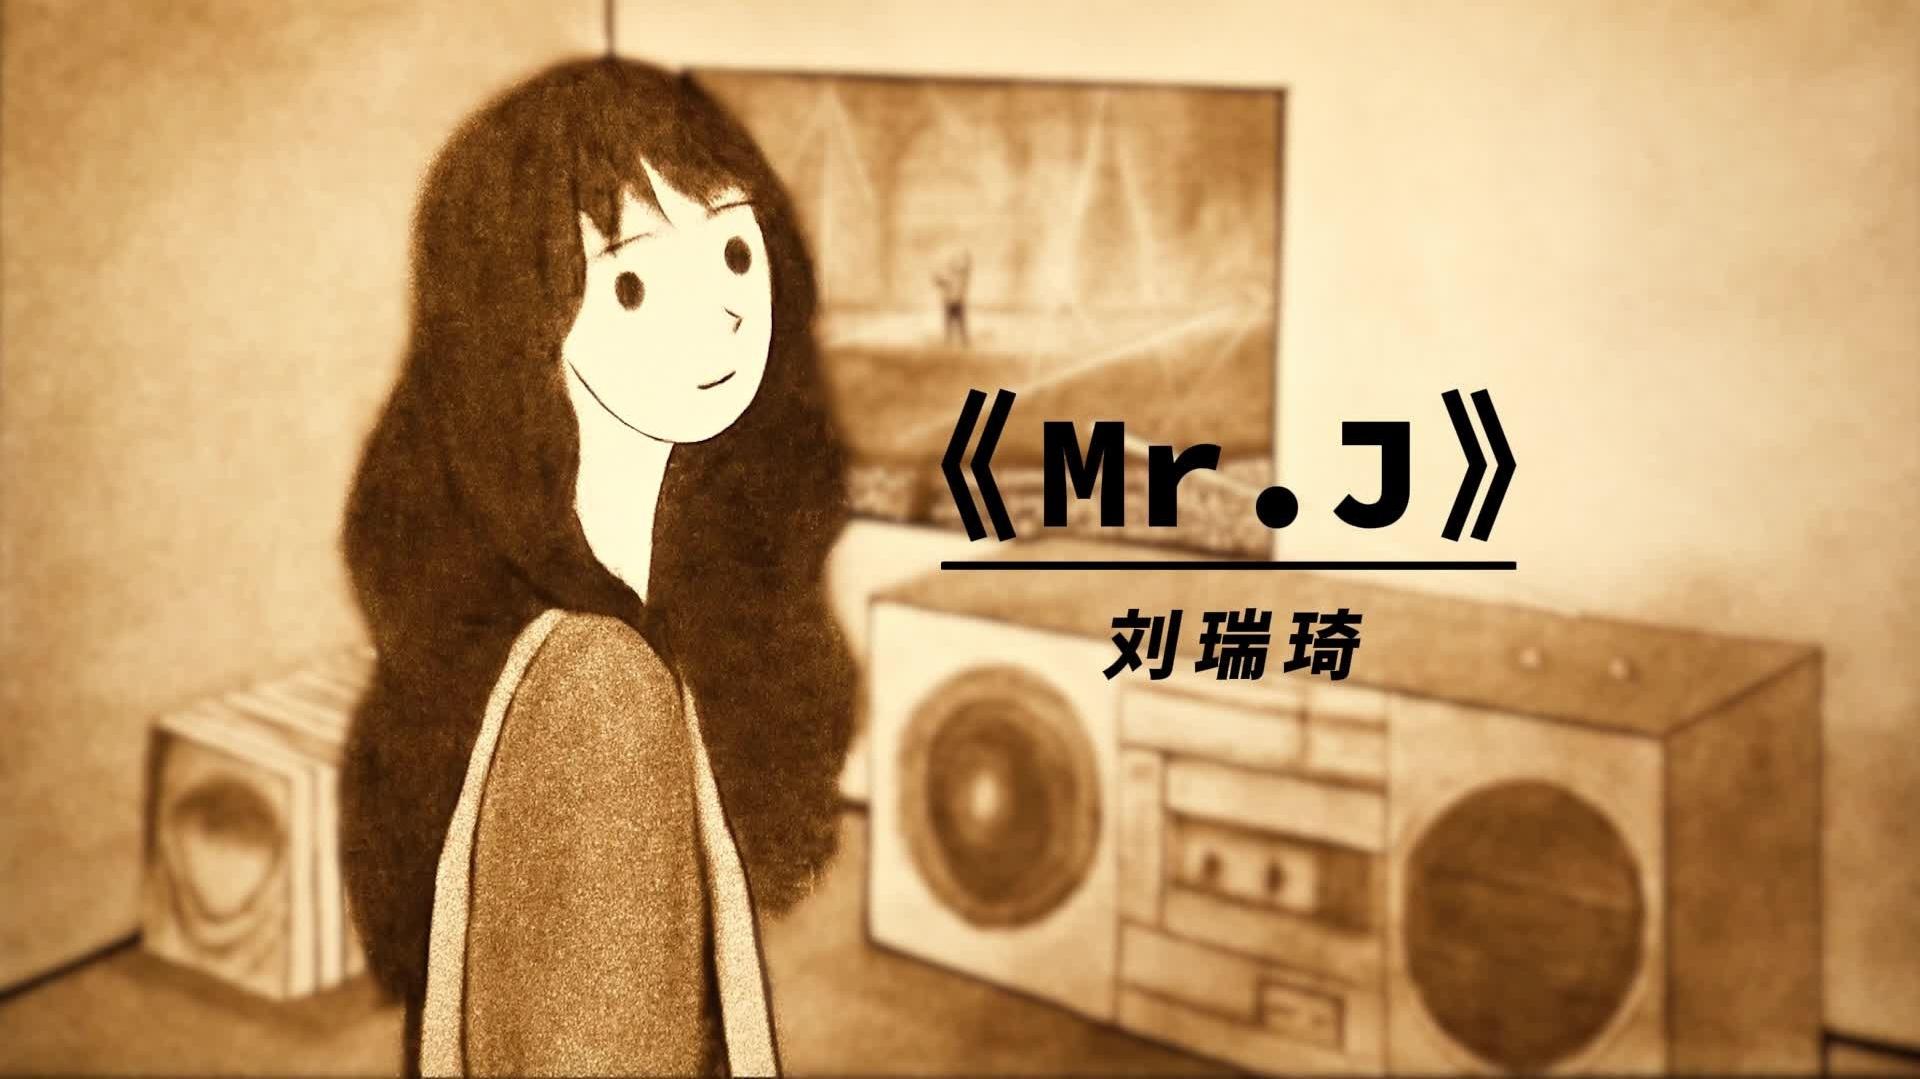 刘瑞琦 - Mr.J